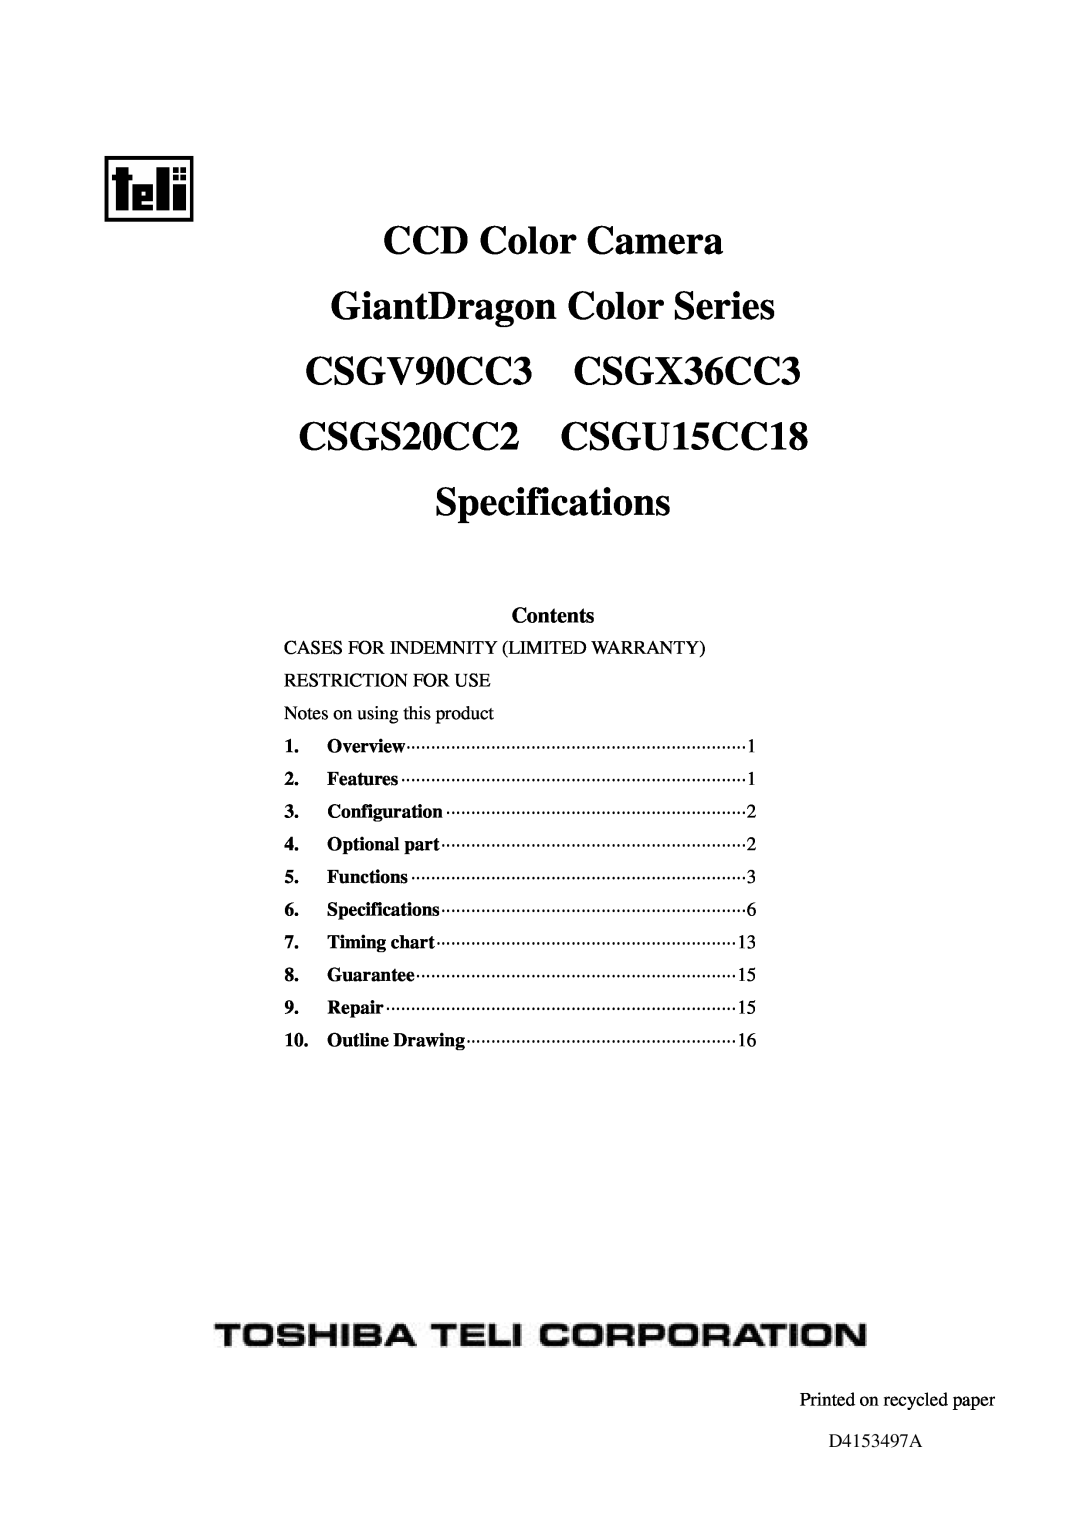 Toshiba CGSV90CC3, CSGU15CC18, CSGS20CC2 Contents, CCD Color Camera GiantDragon Color Series CSGV90CC3 CSGX36CC3 